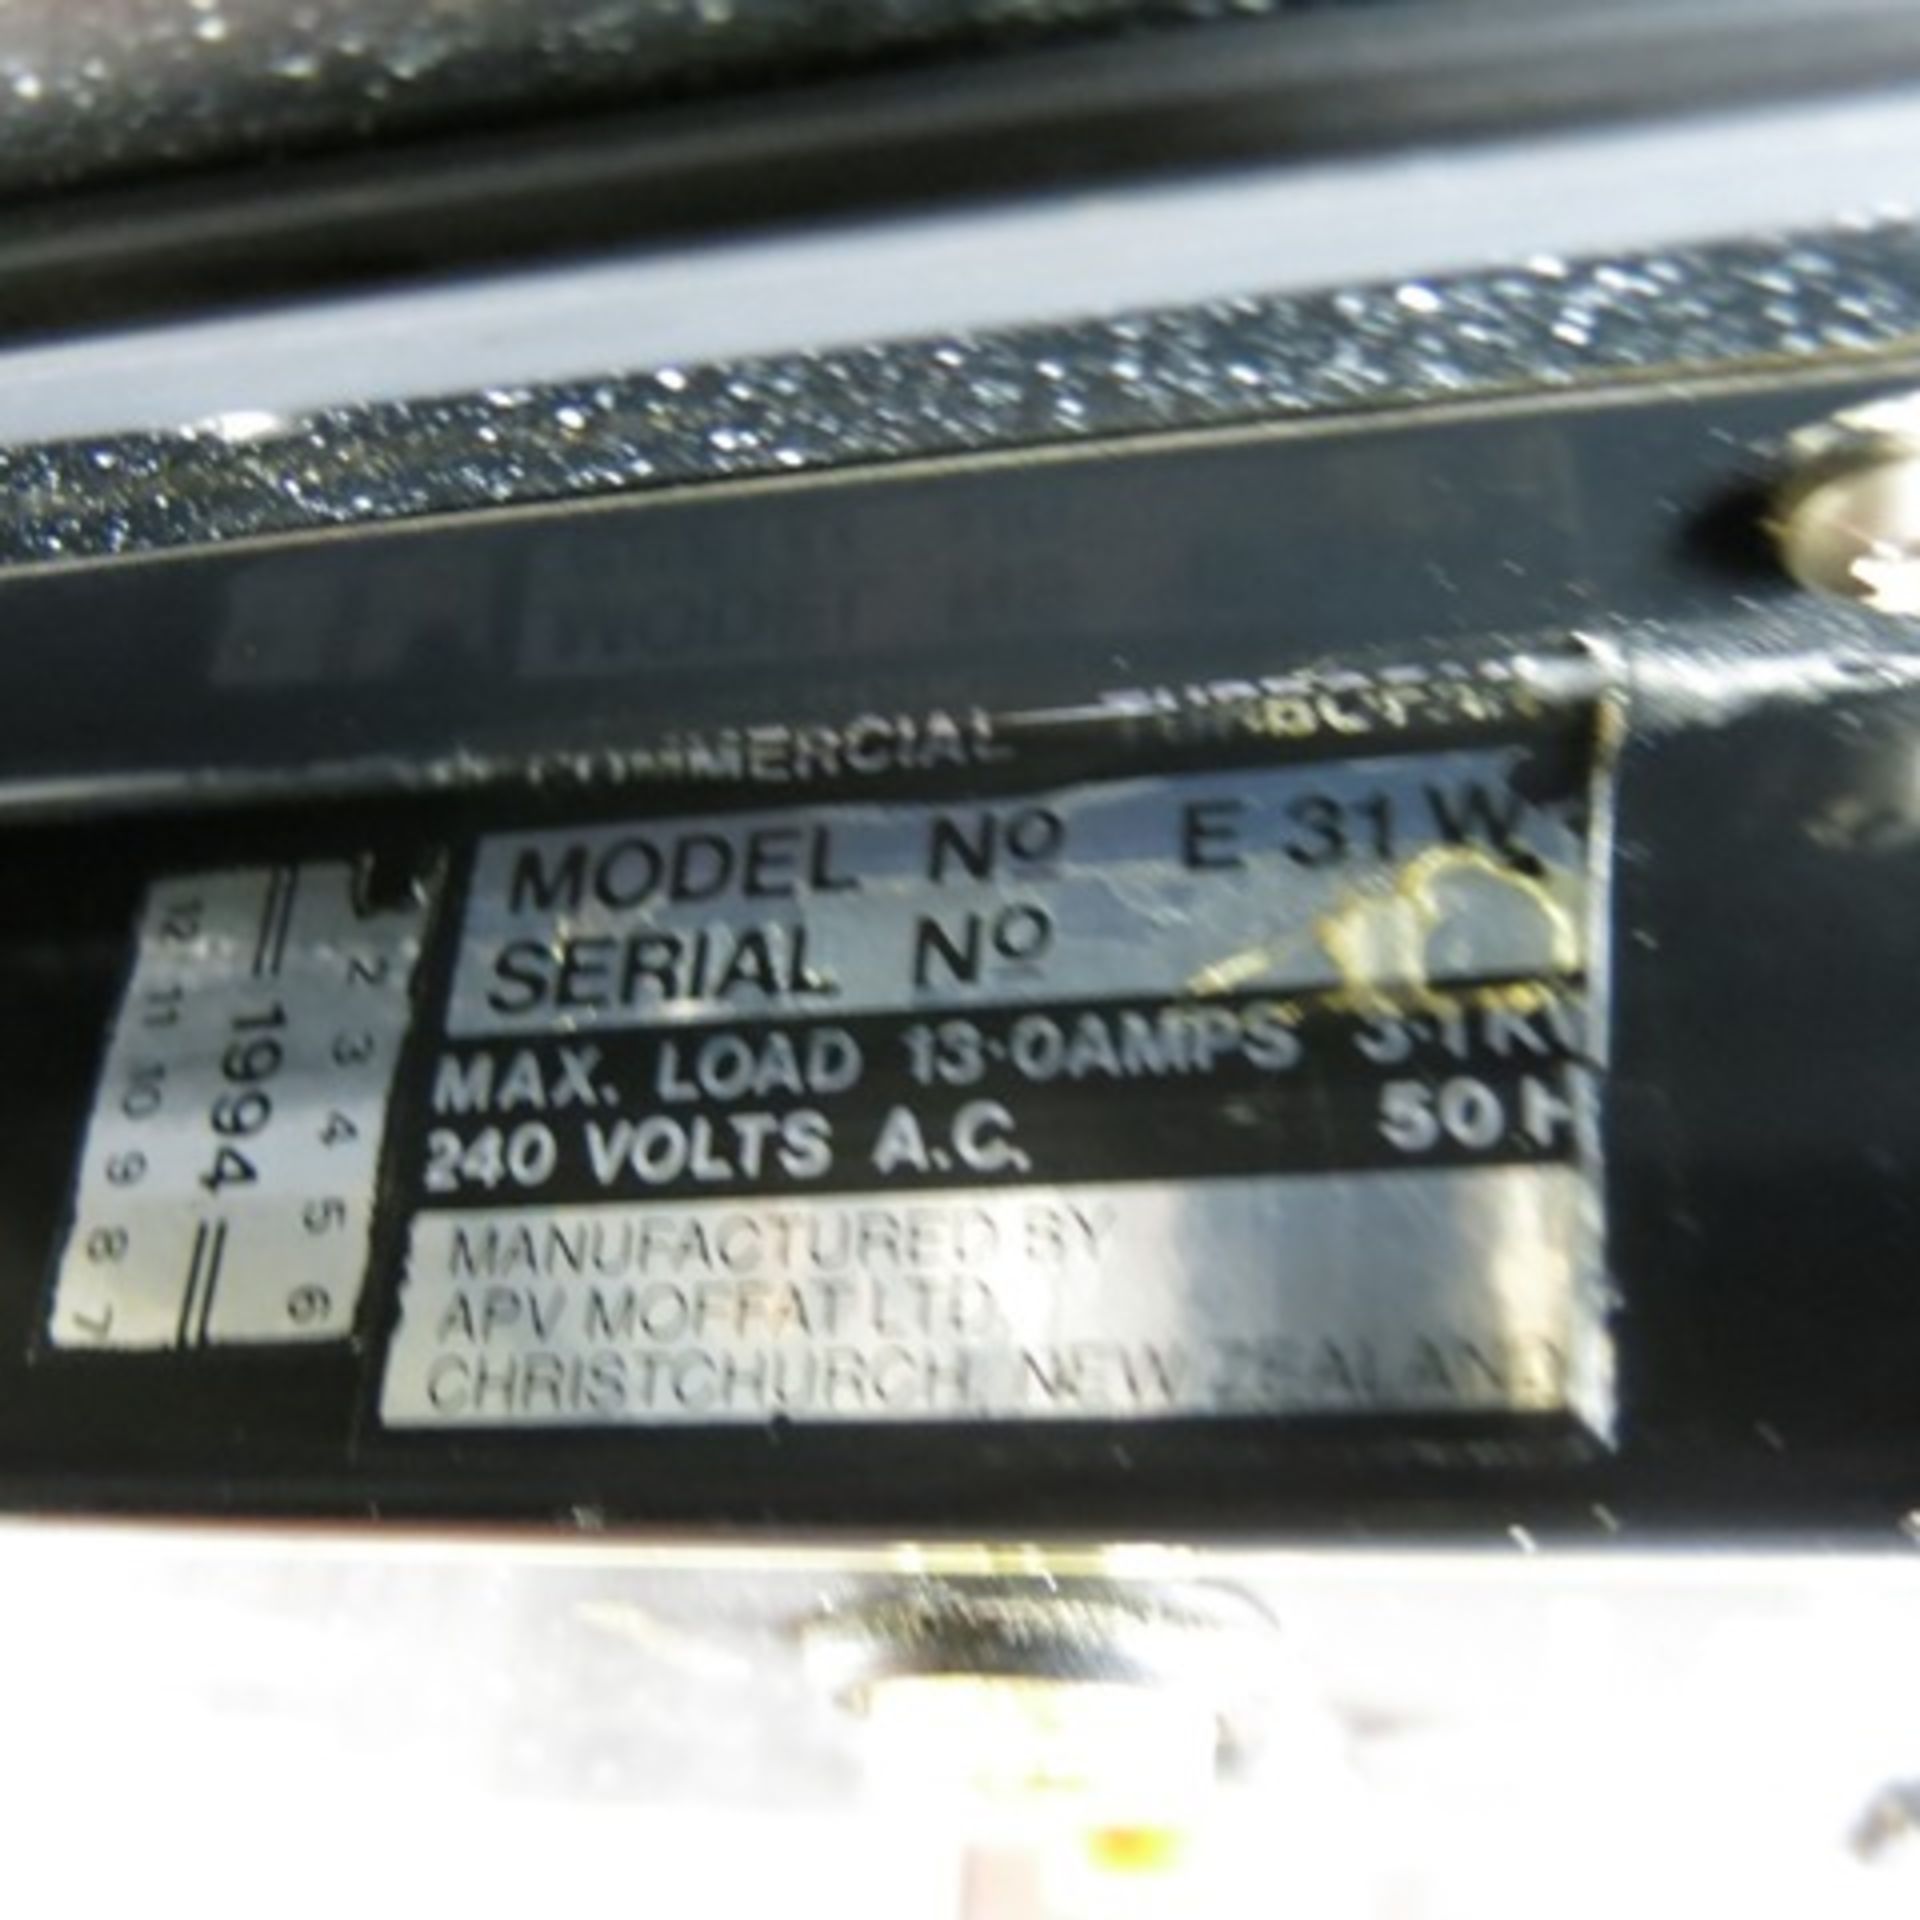 Blue Seal Turbo Fan Electric Multi Function Oven. Model E31W. - Image 4 of 4